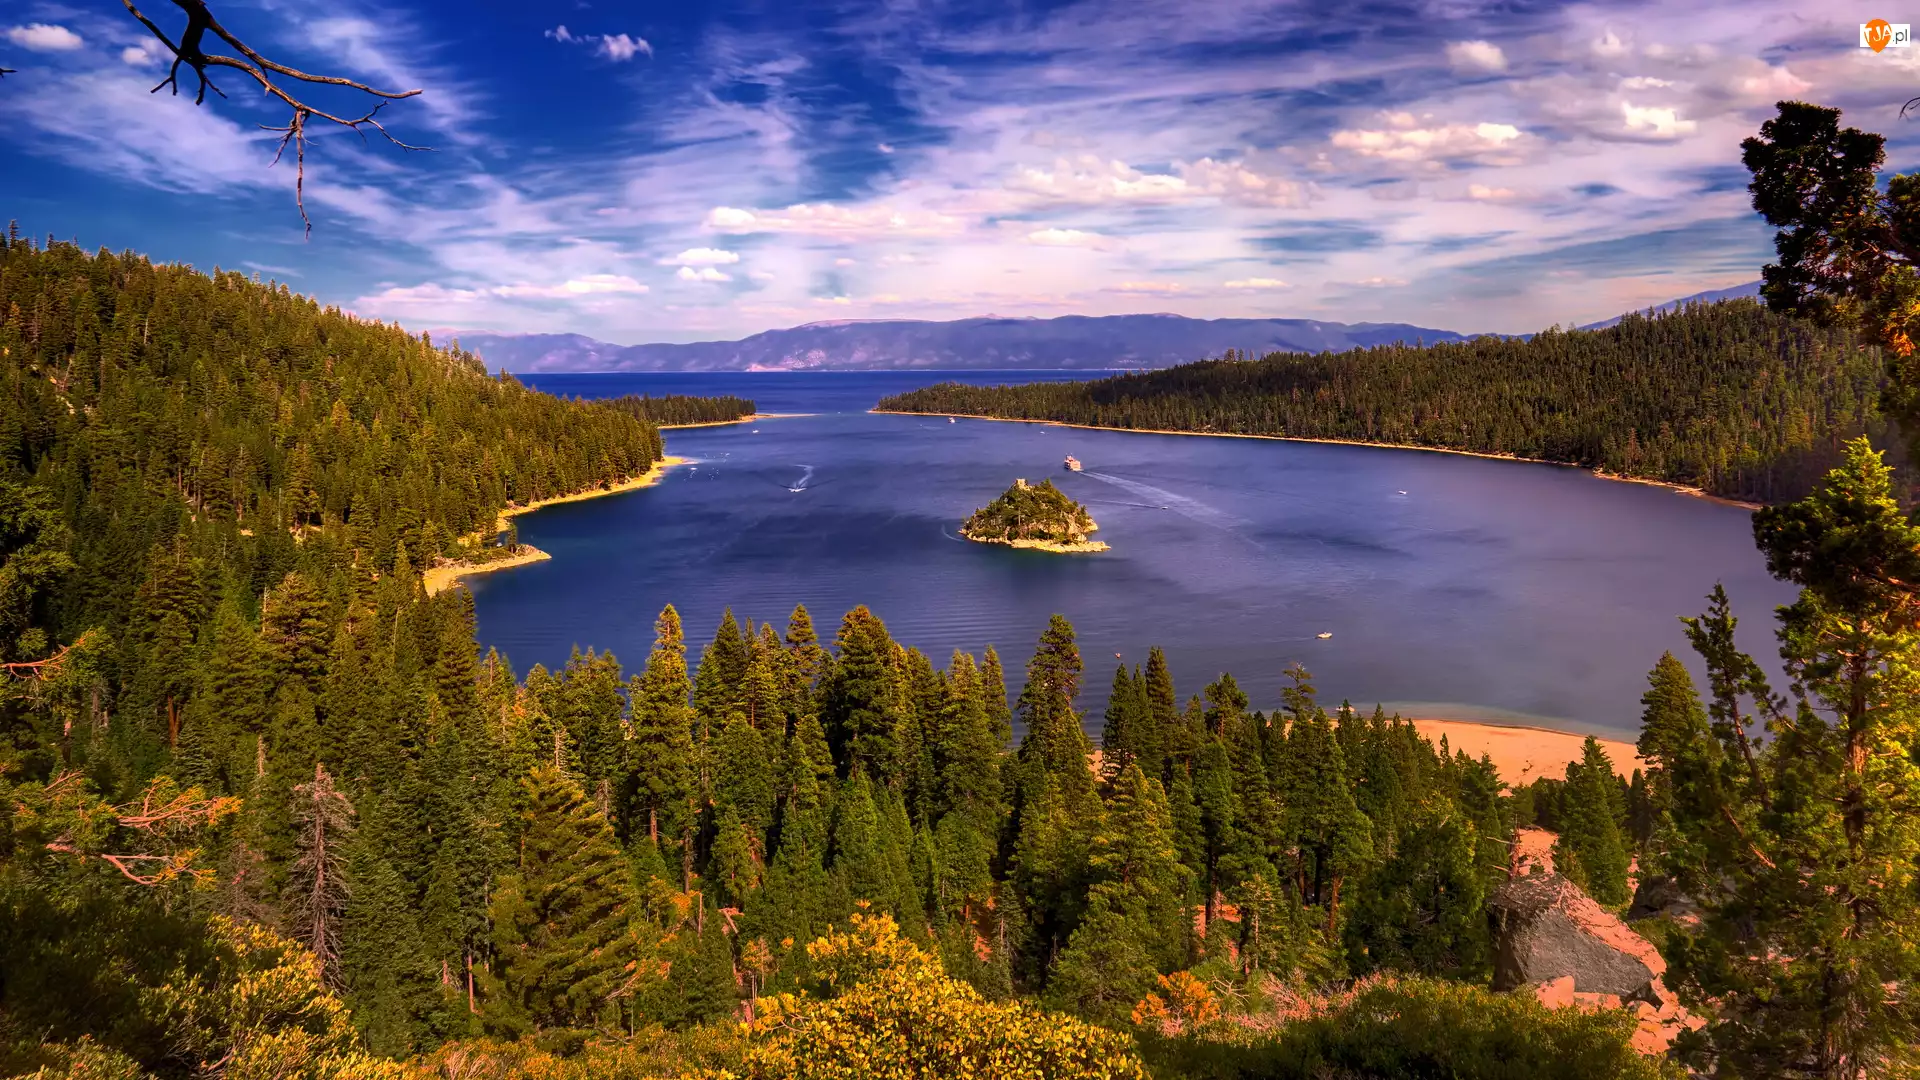 Wyspa Fannette, Park Emerald Bay, Stany Zjednoczone, Jezioro Tahoe, Kalifornia, Drzewa, Lasy